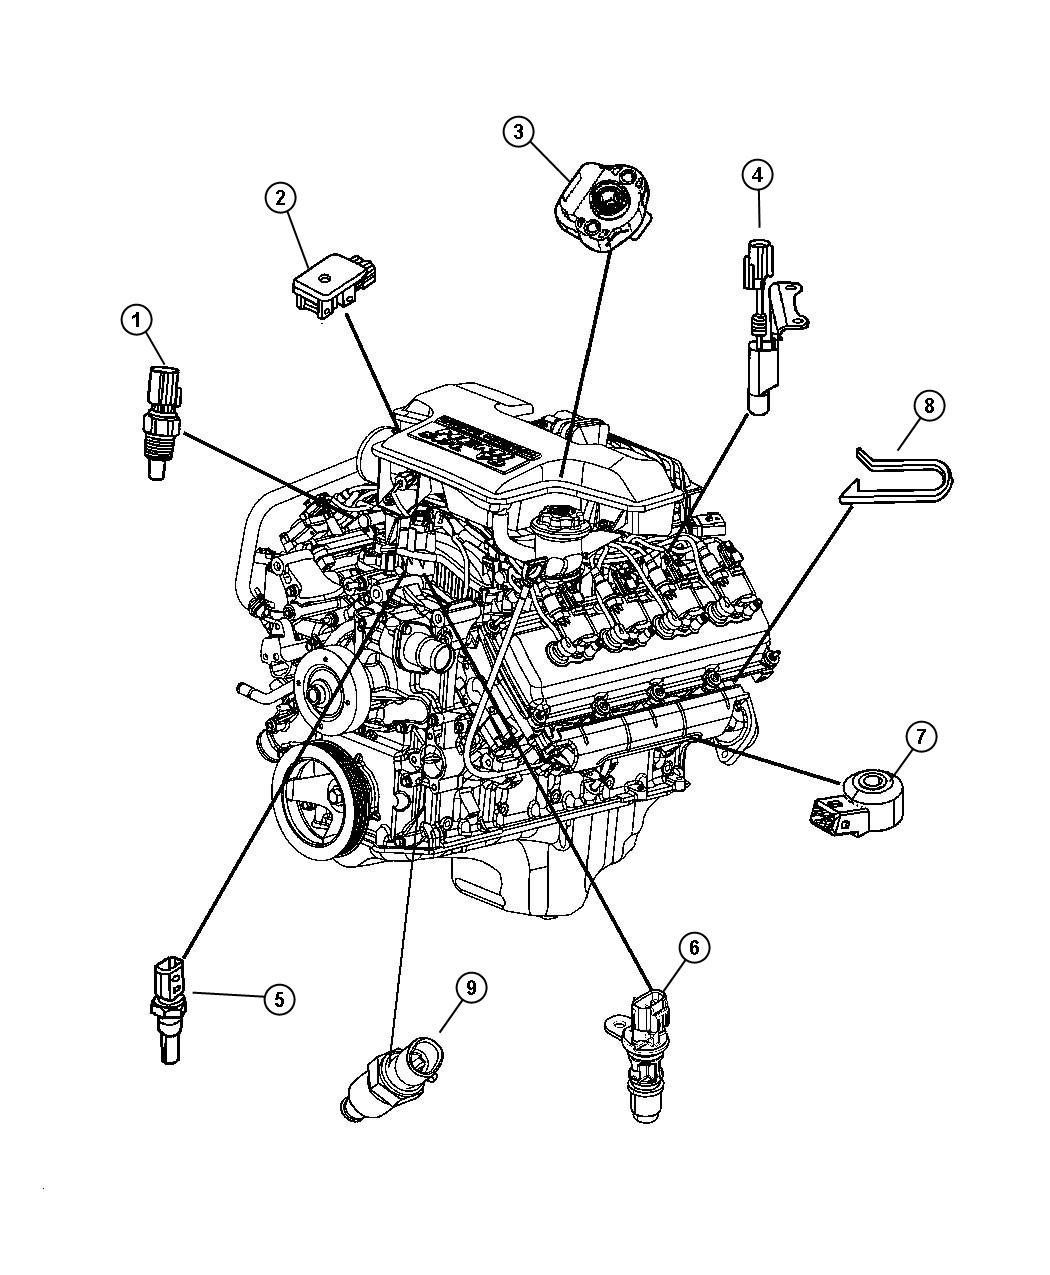 2003 Dodge Ram 1500 Engine Wiring Diagram from www.moparpartsinc.com